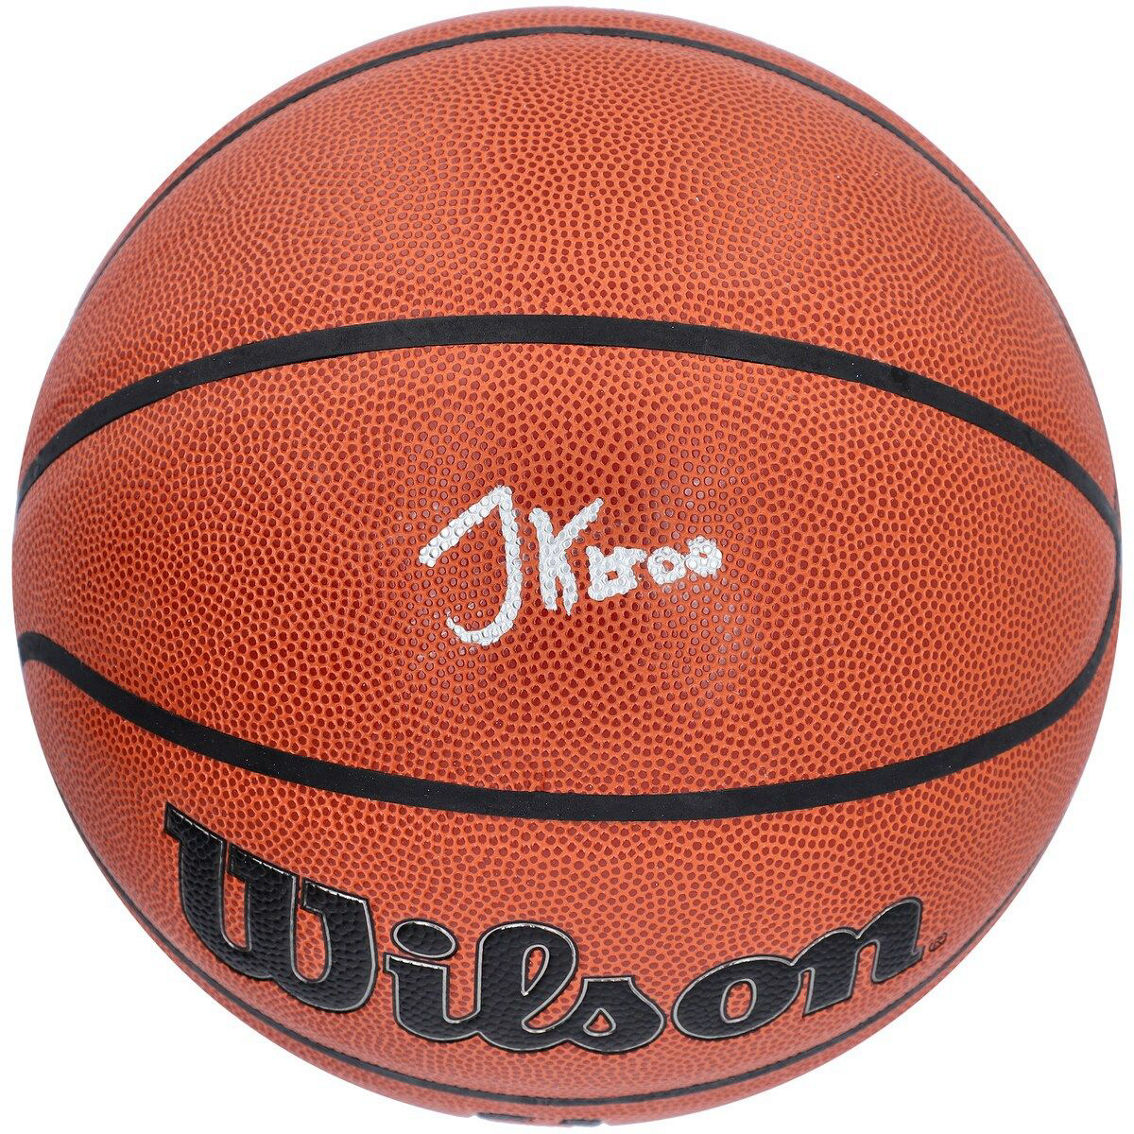 Fanatics Authentic Jonathan Kuminga Golden State Warriors Autographed Wilson Indoor/Outdoor Basketball - Image 2 of 3